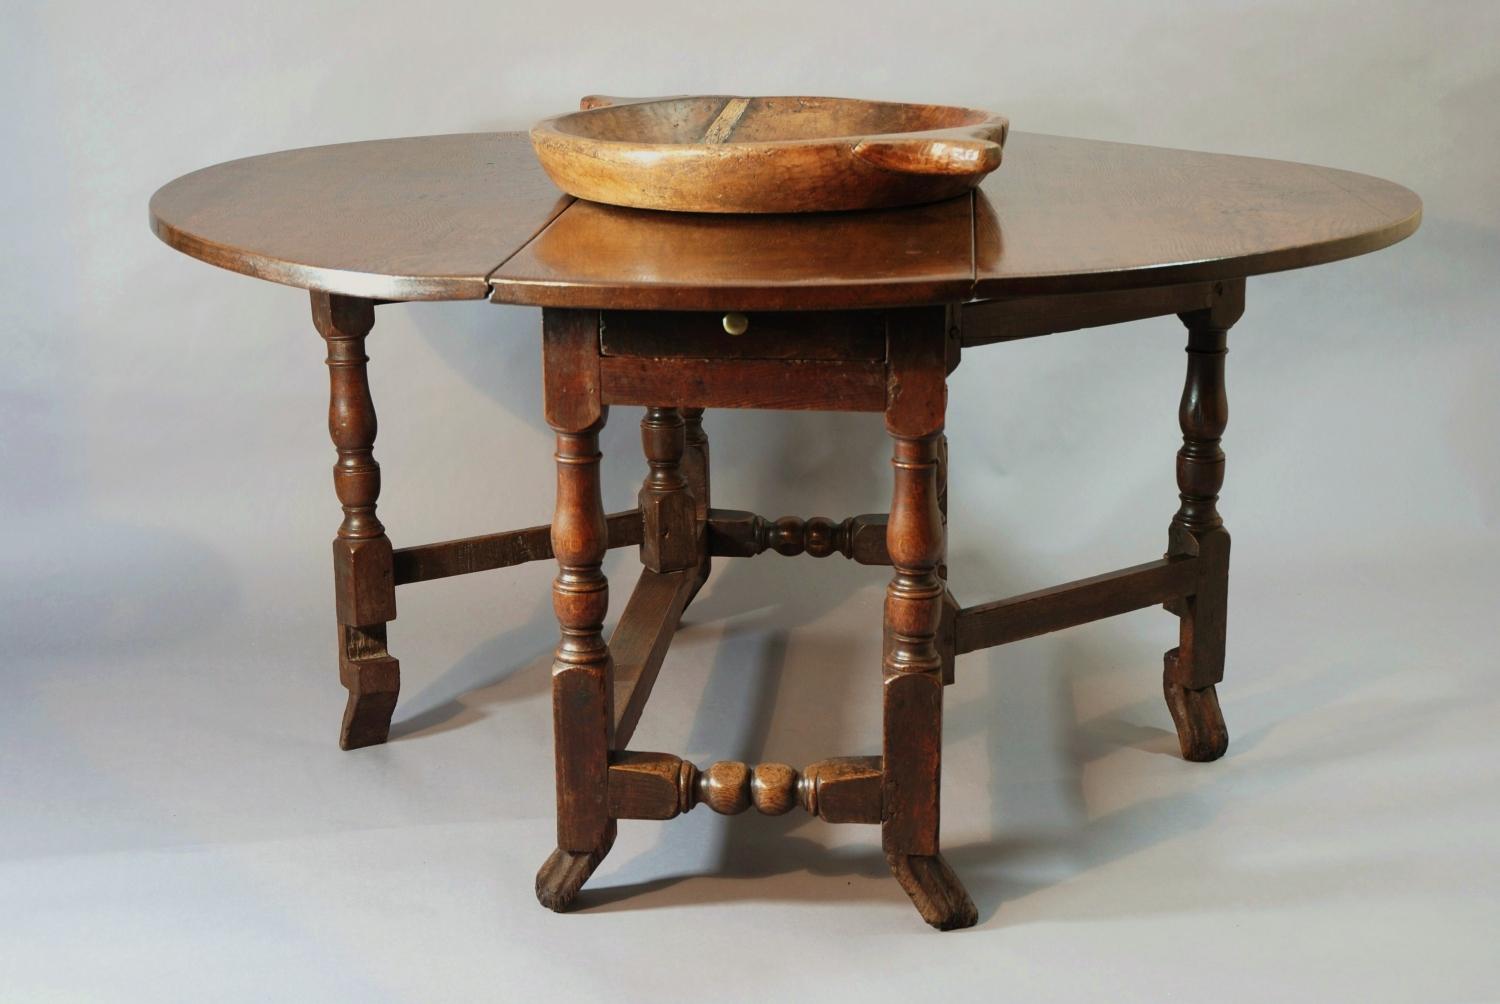 Late 17thc/Early 18thc oak gateleg table